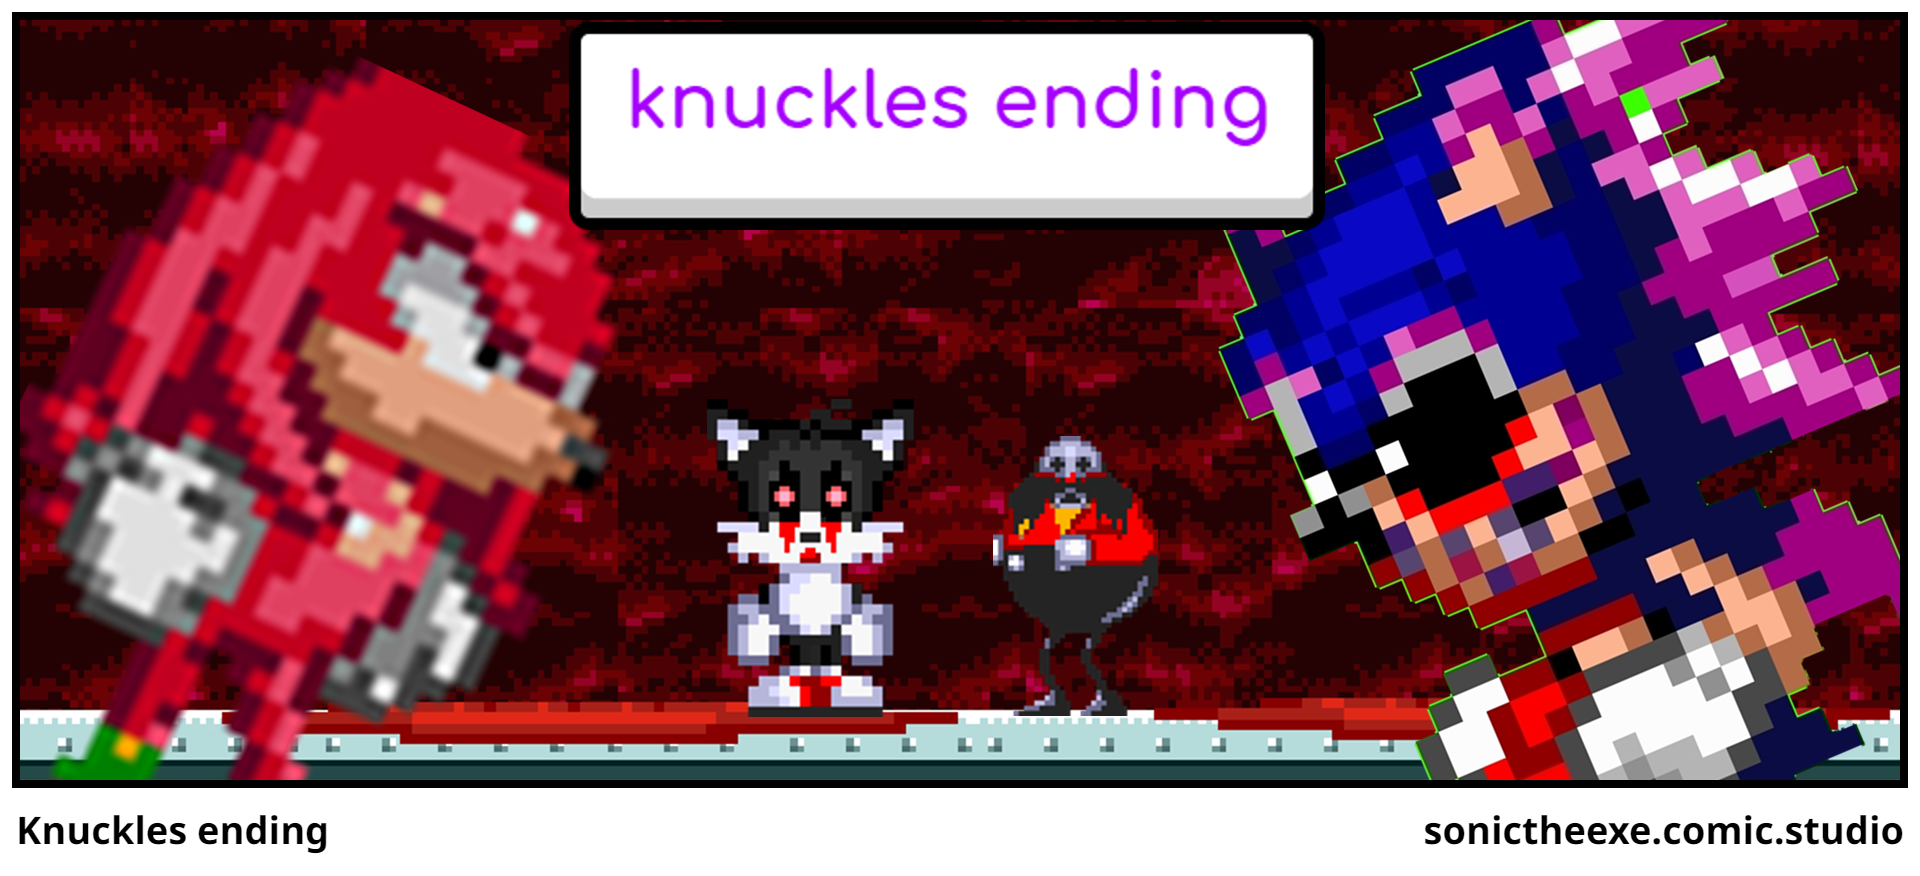 Knuckles ending